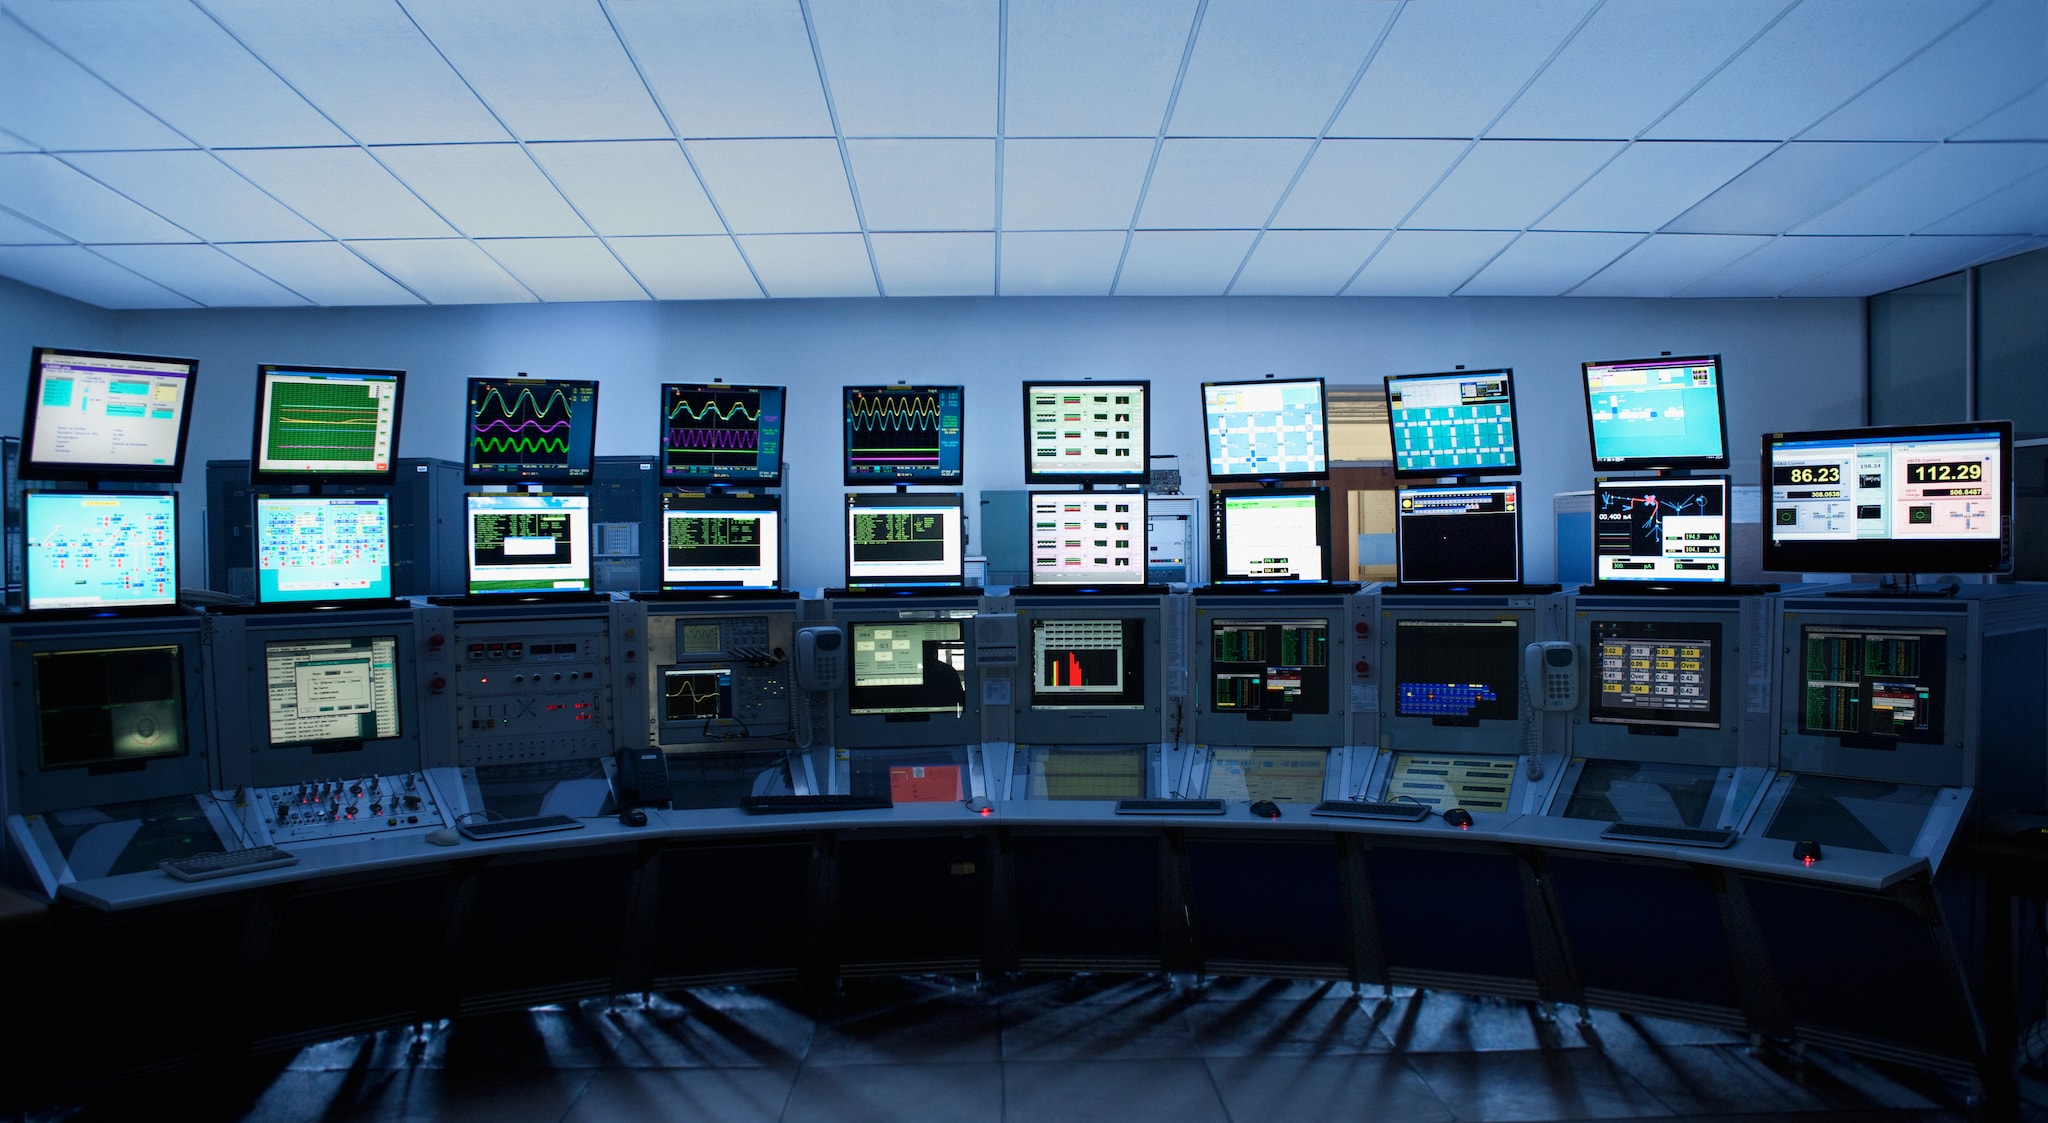 noc control room image